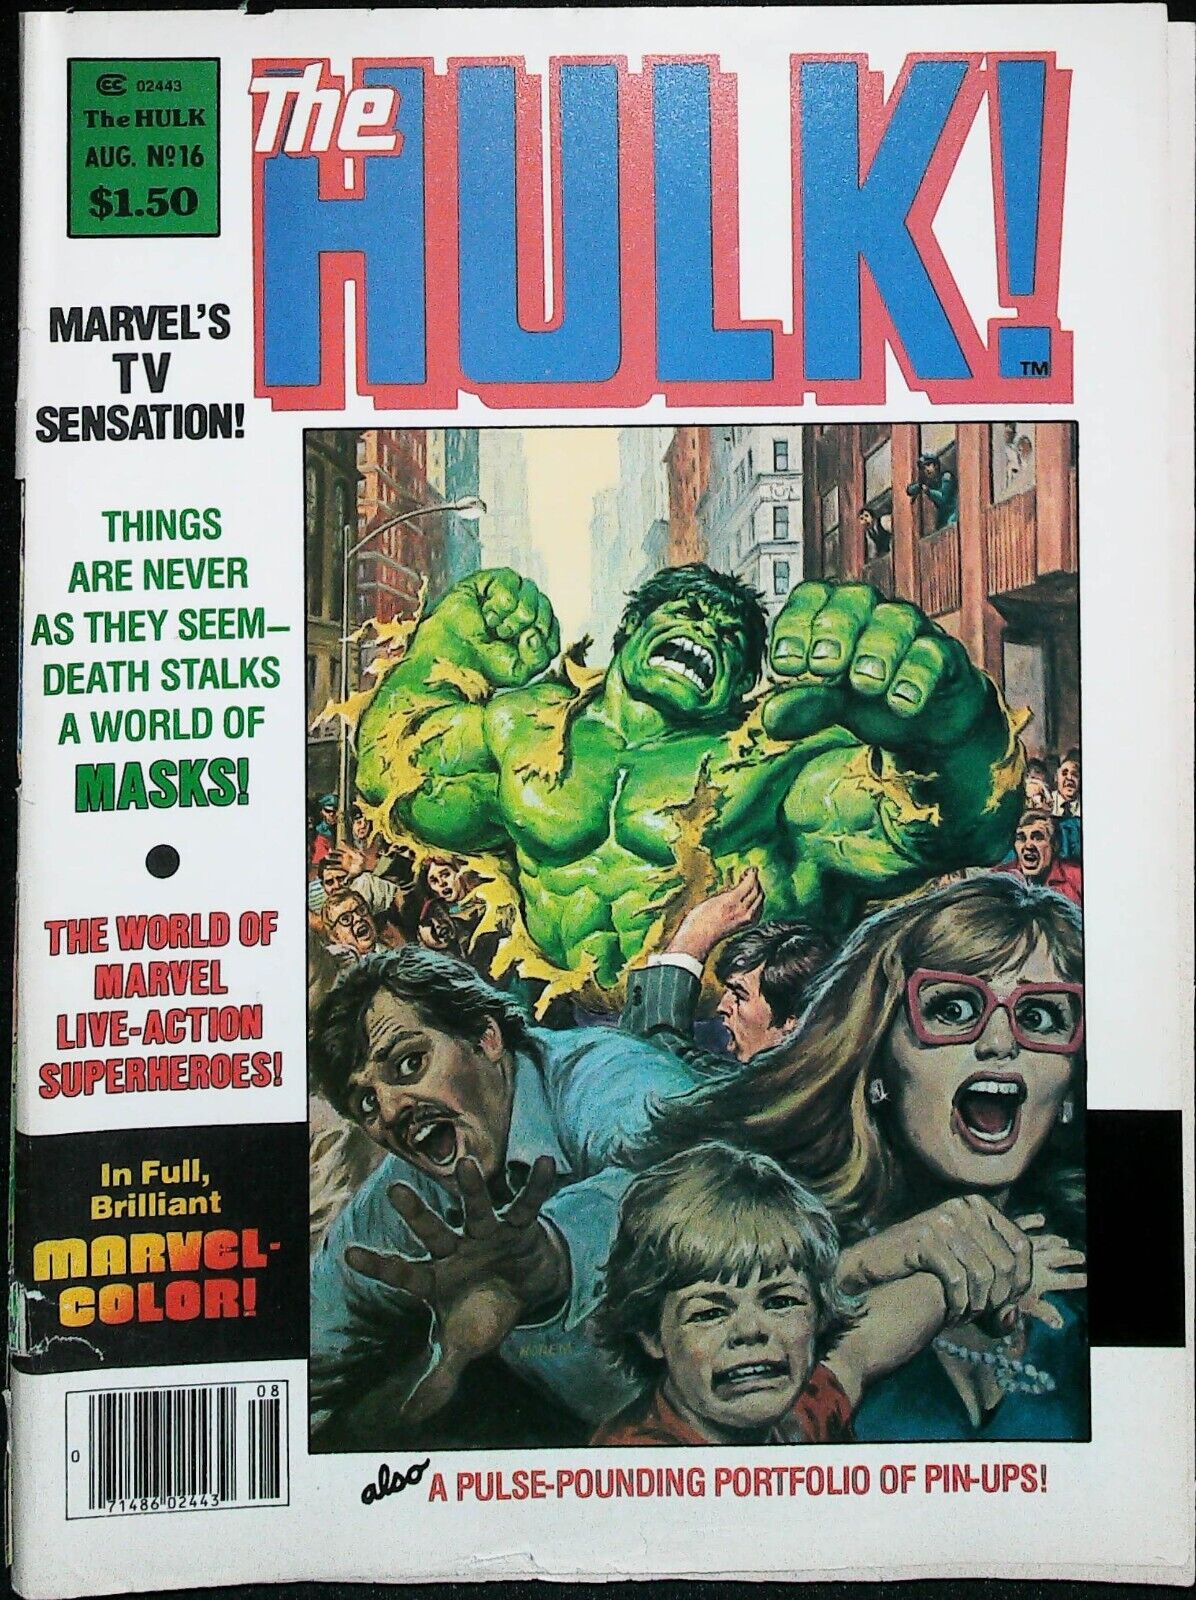 Hulk Magazine (1979) Issue 16 & 18 Low Grade - Read Description - Bad spines